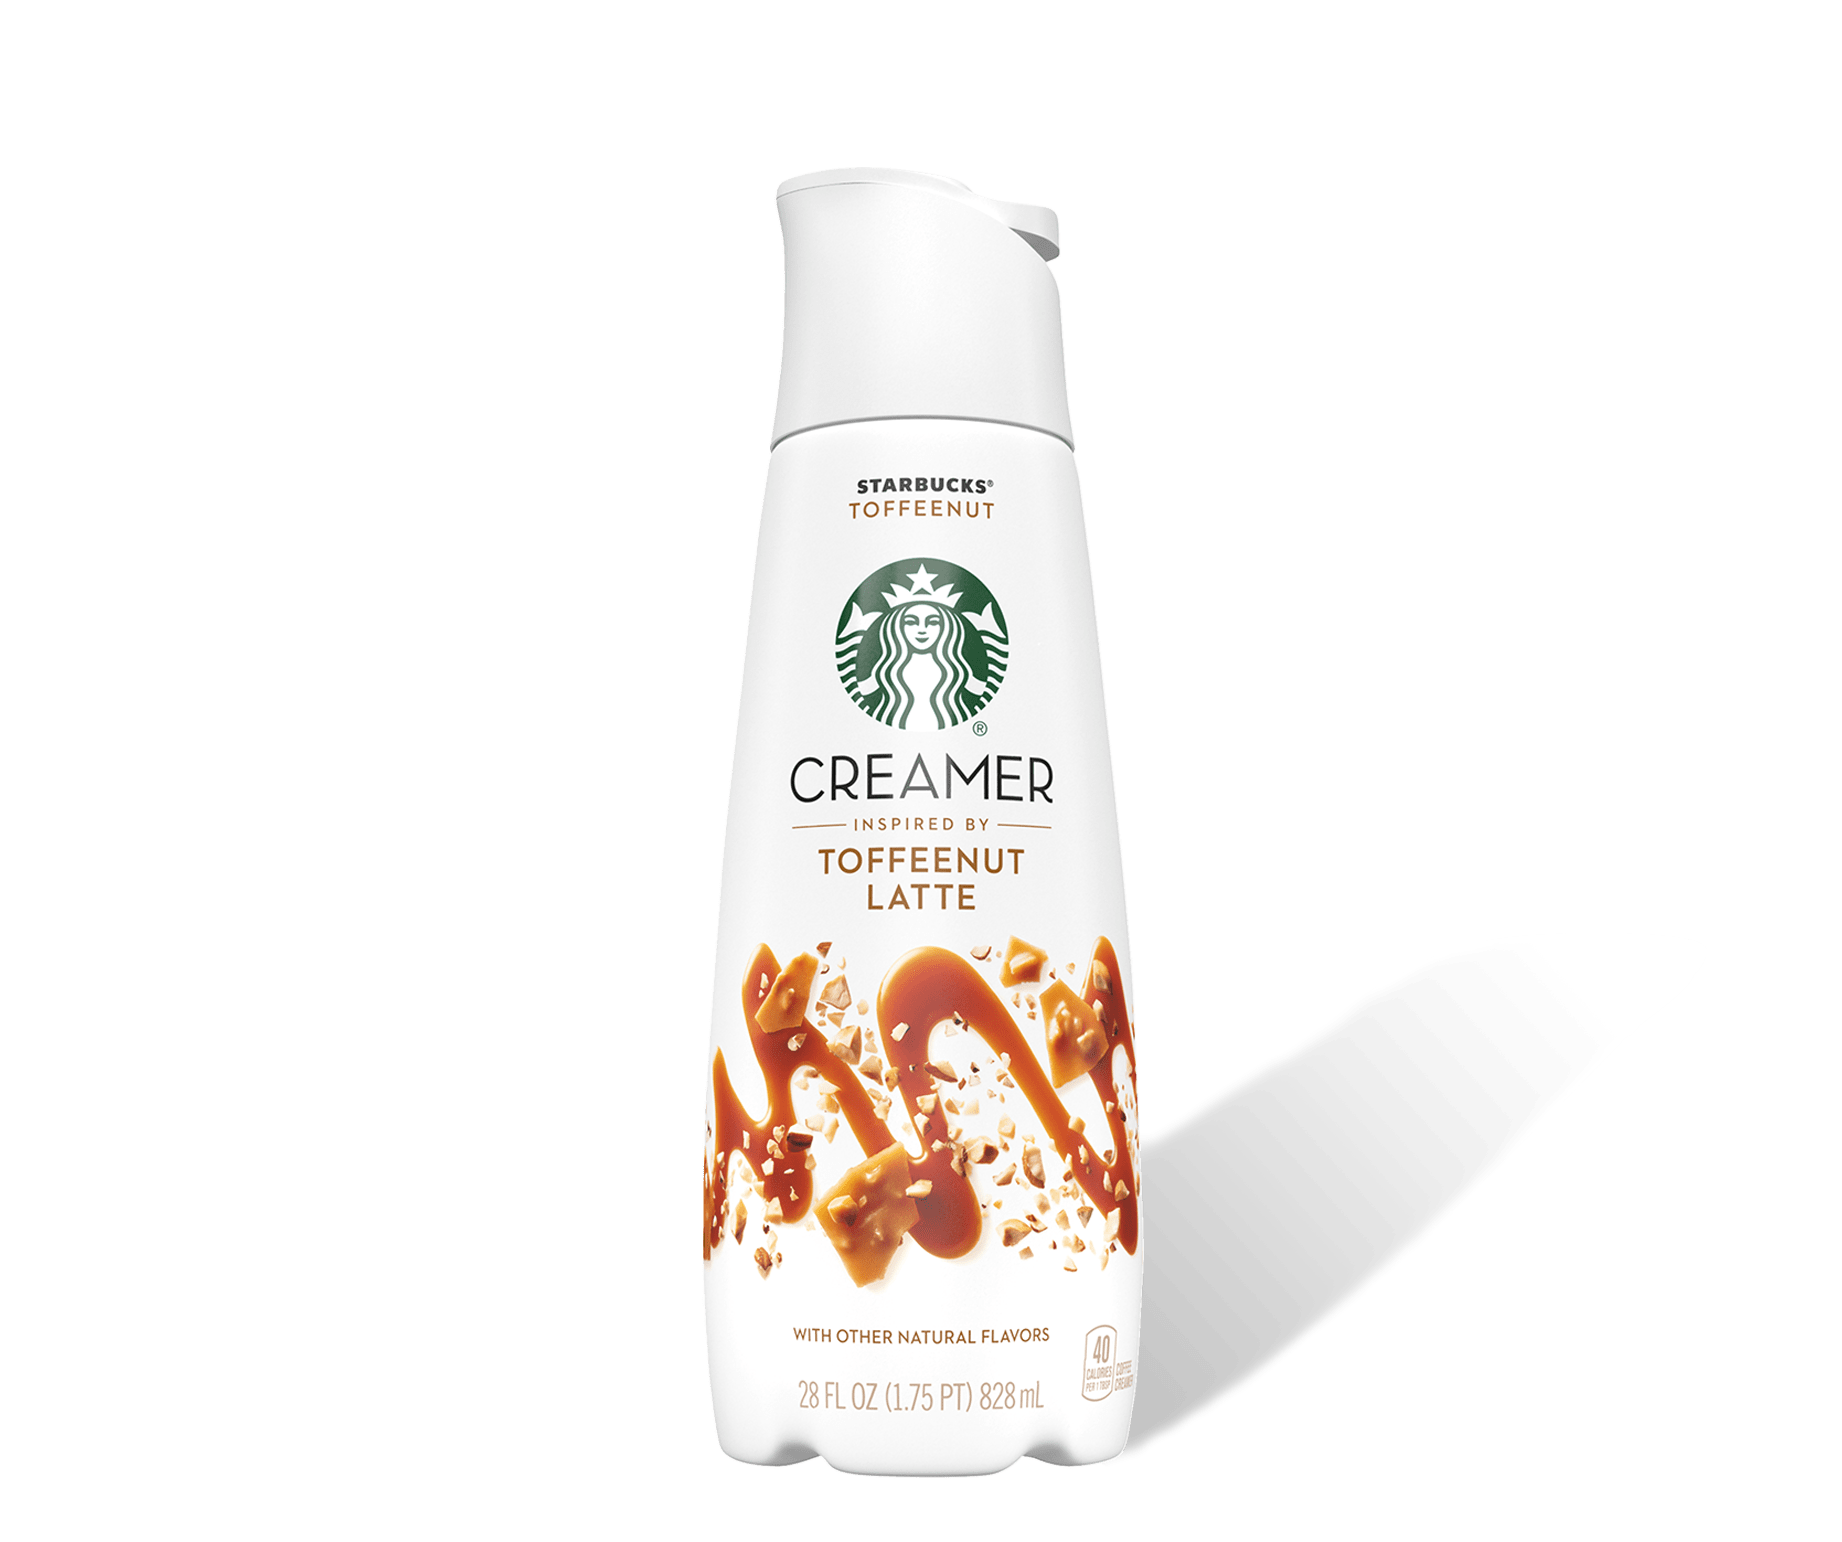 Starbucks® Toffeenut Flavored Creamer